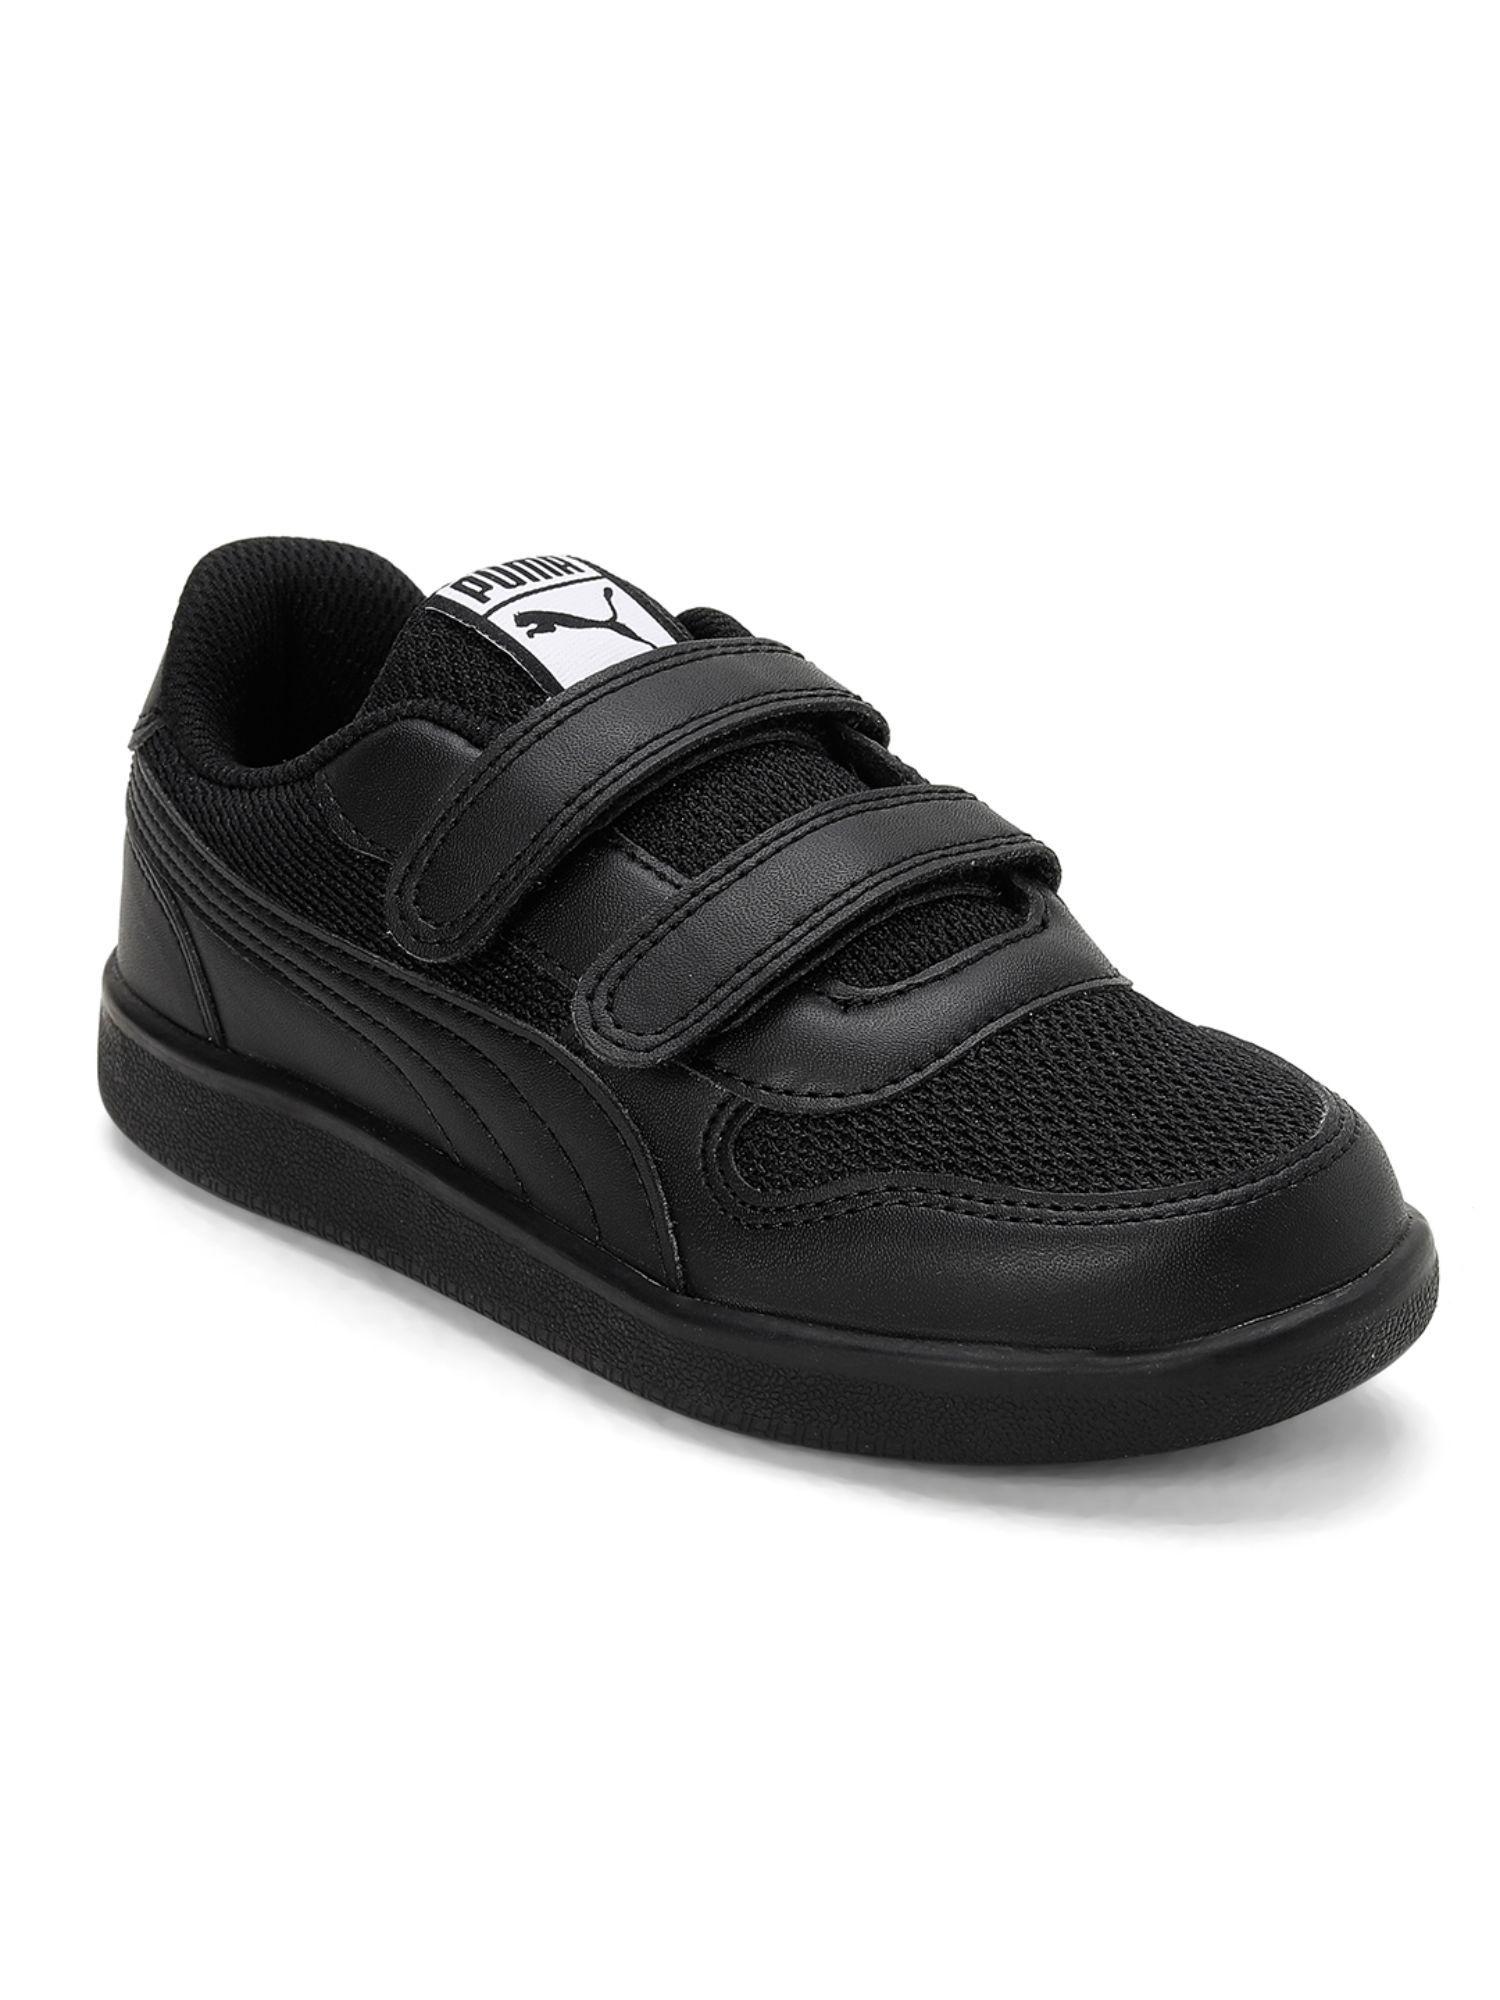 punch-comfort-junior-kids-black-casual-shoes